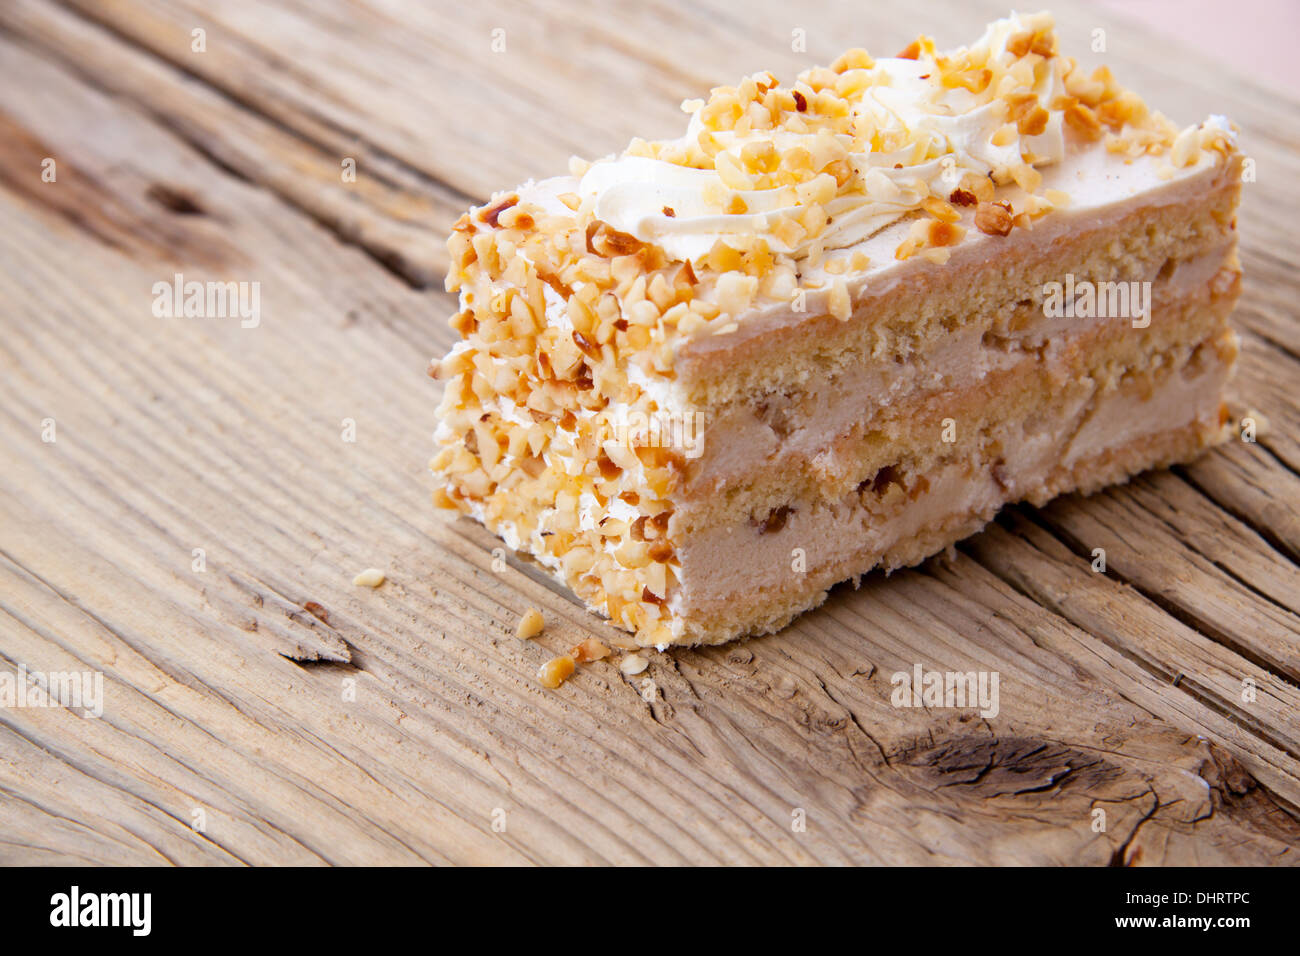 Piece of creamy hazelnut cake on old wooden table Stock Photo